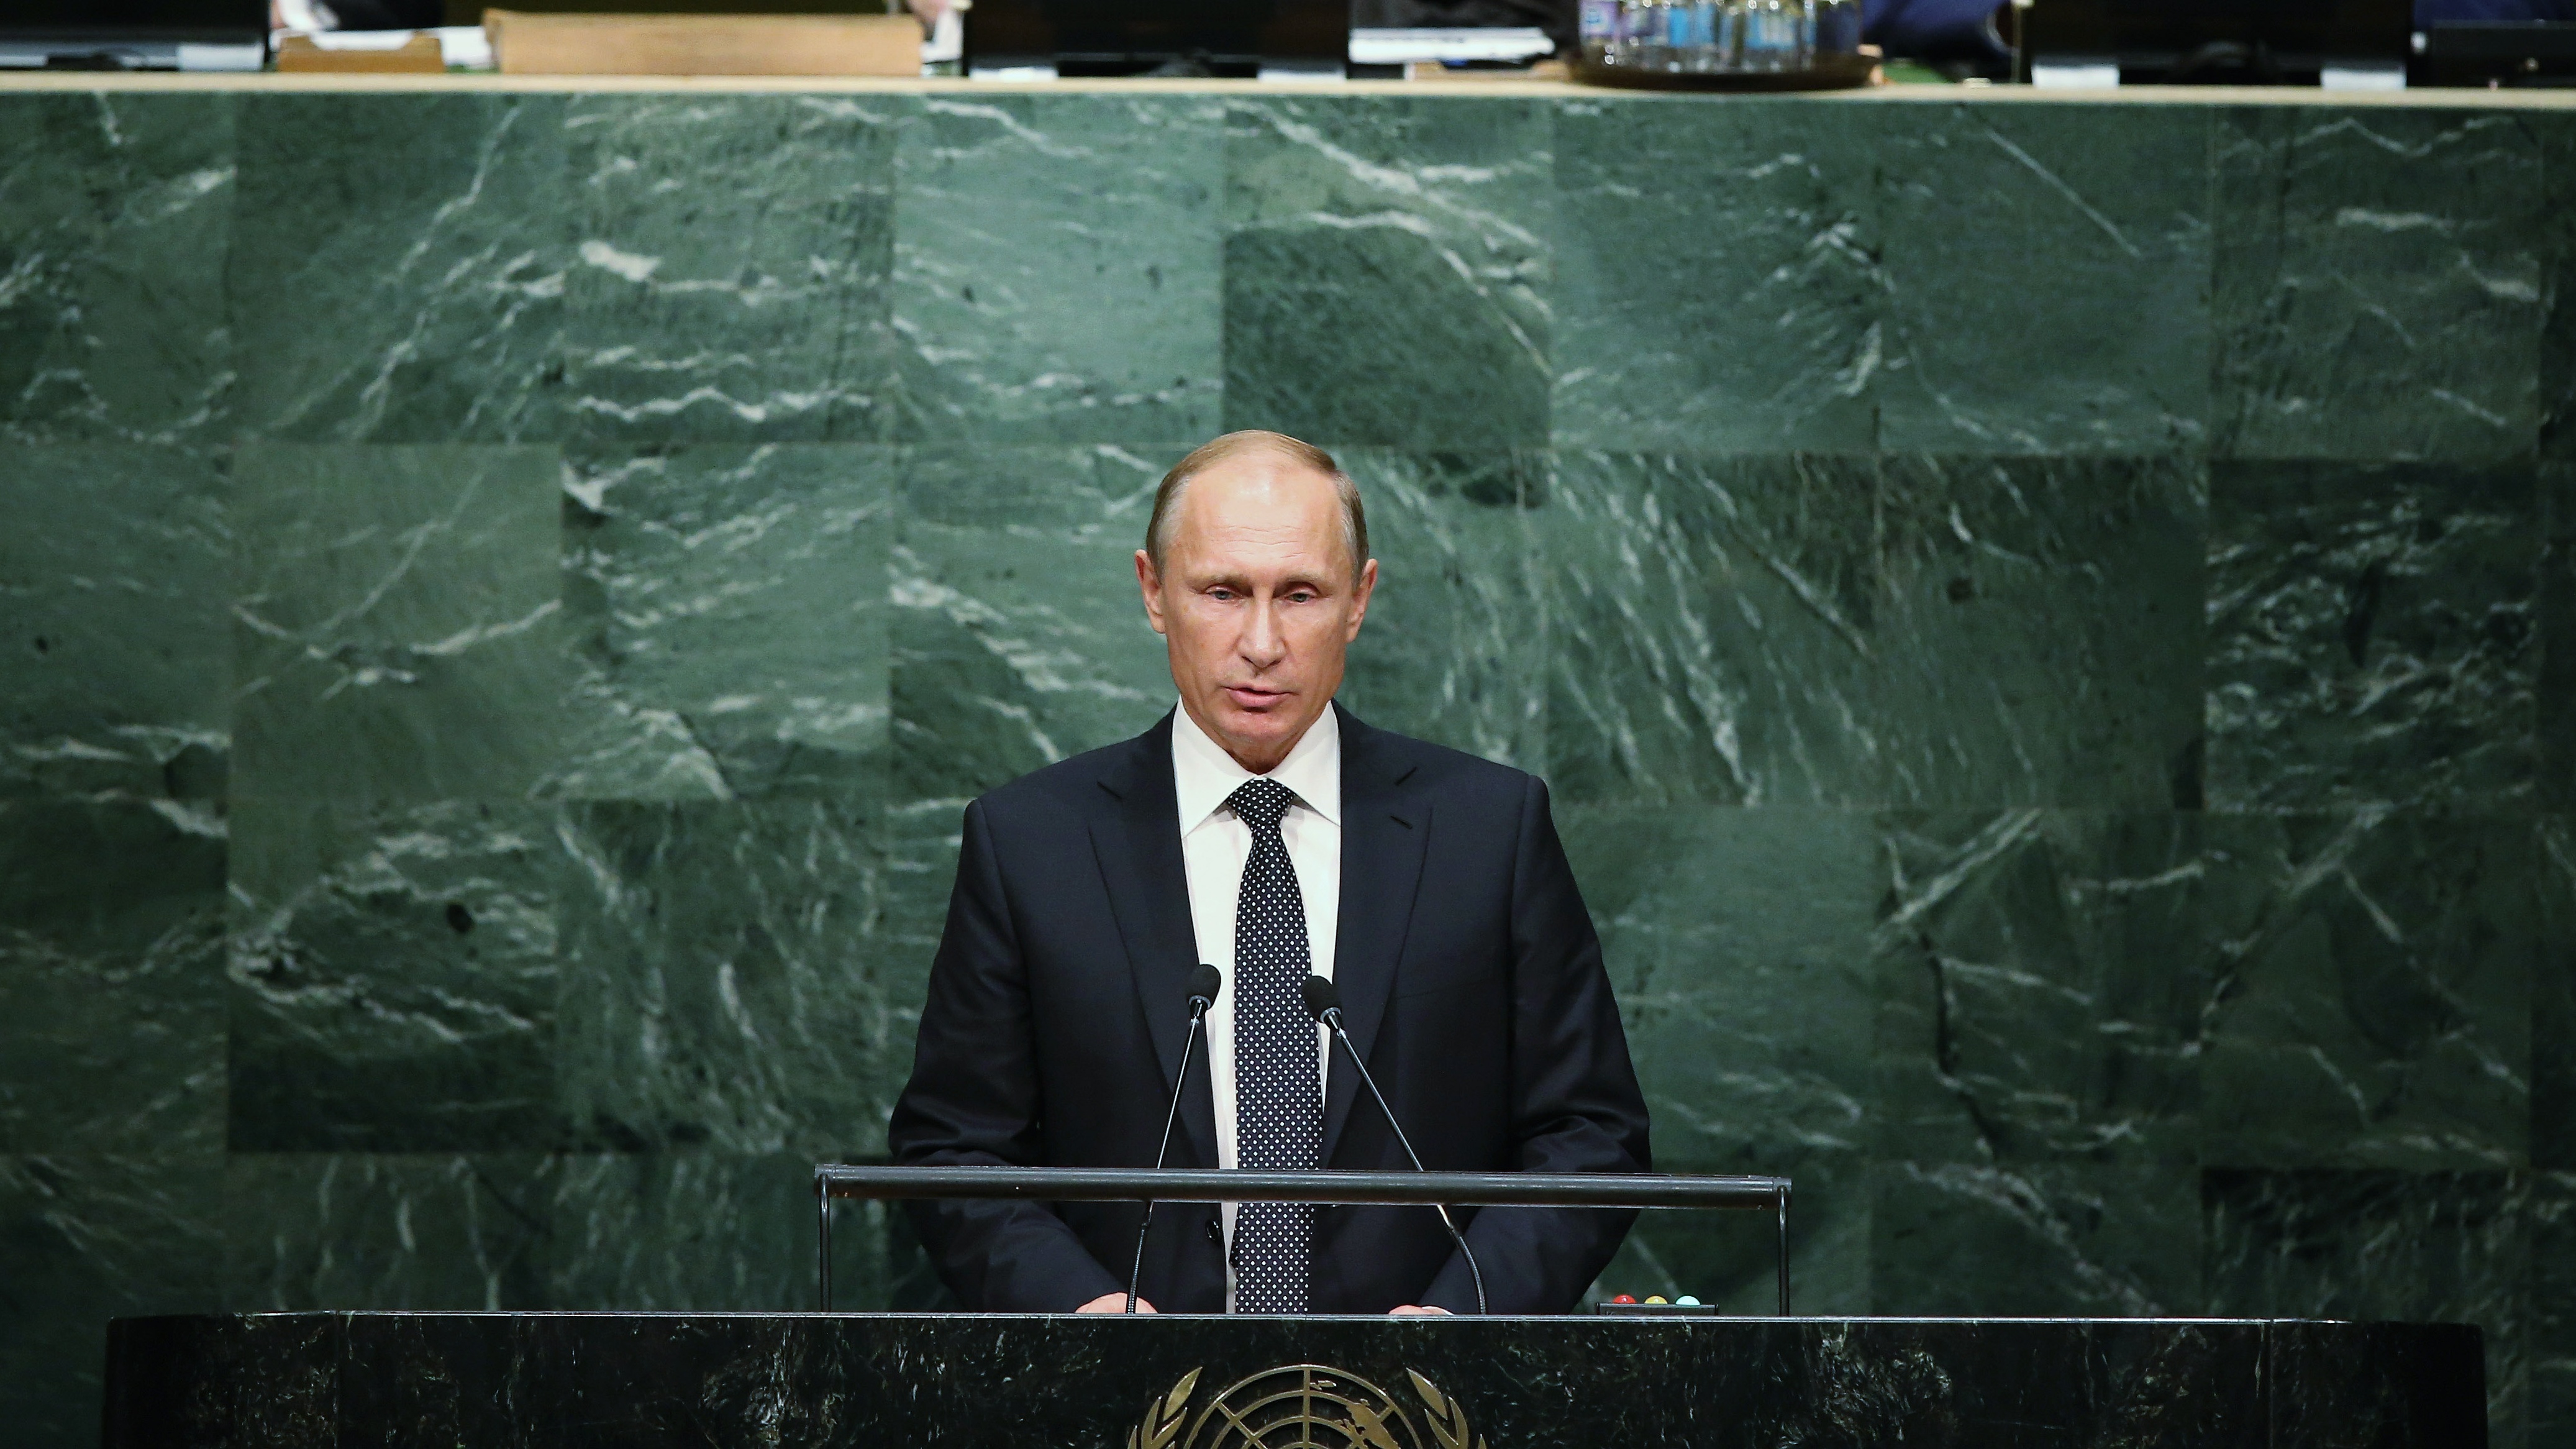 Vladimir Putin addressing the UN General Assembly.